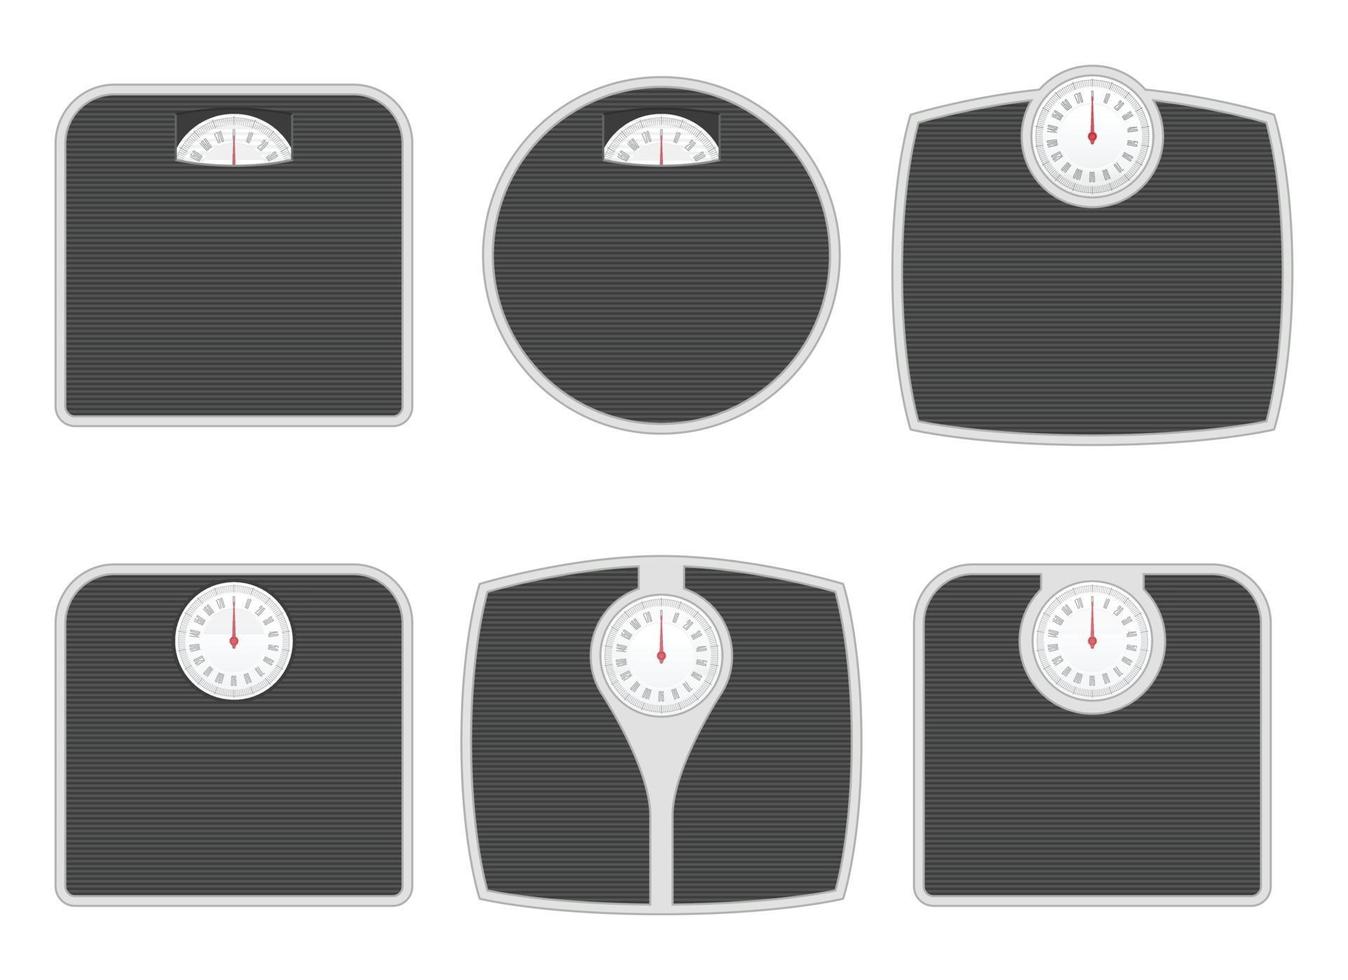 Badezimmerwaage in verschiedenen Formen Vektor-Illustration vektor